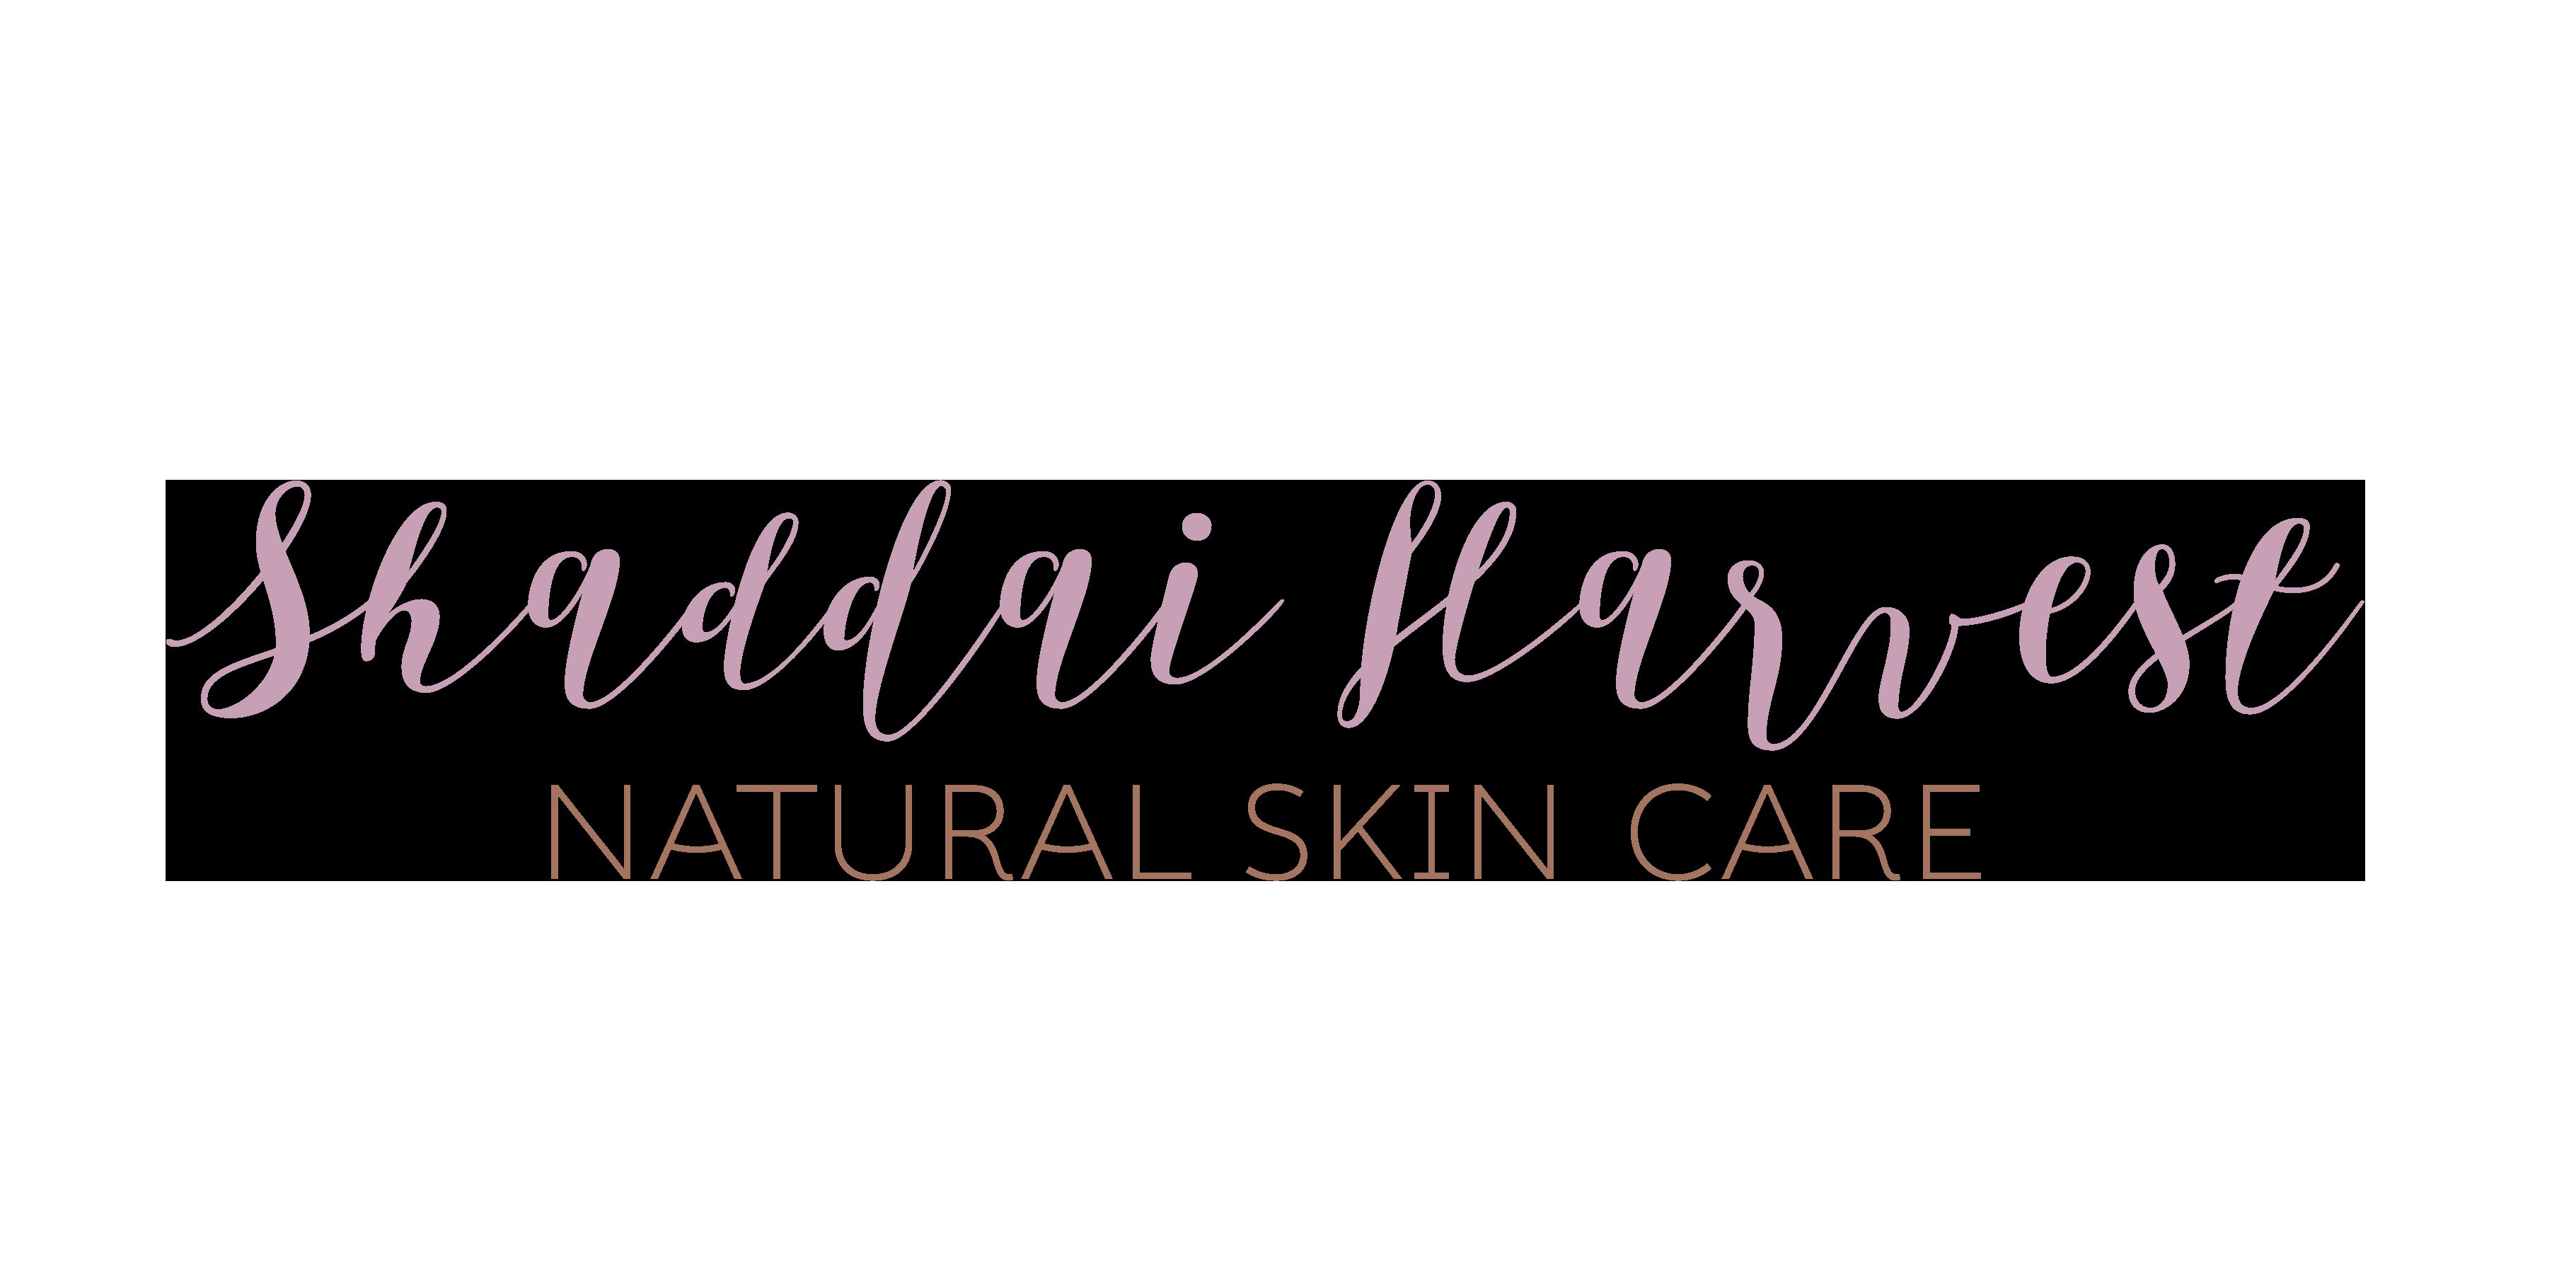 Shaddai Harvest Natural Skin Care